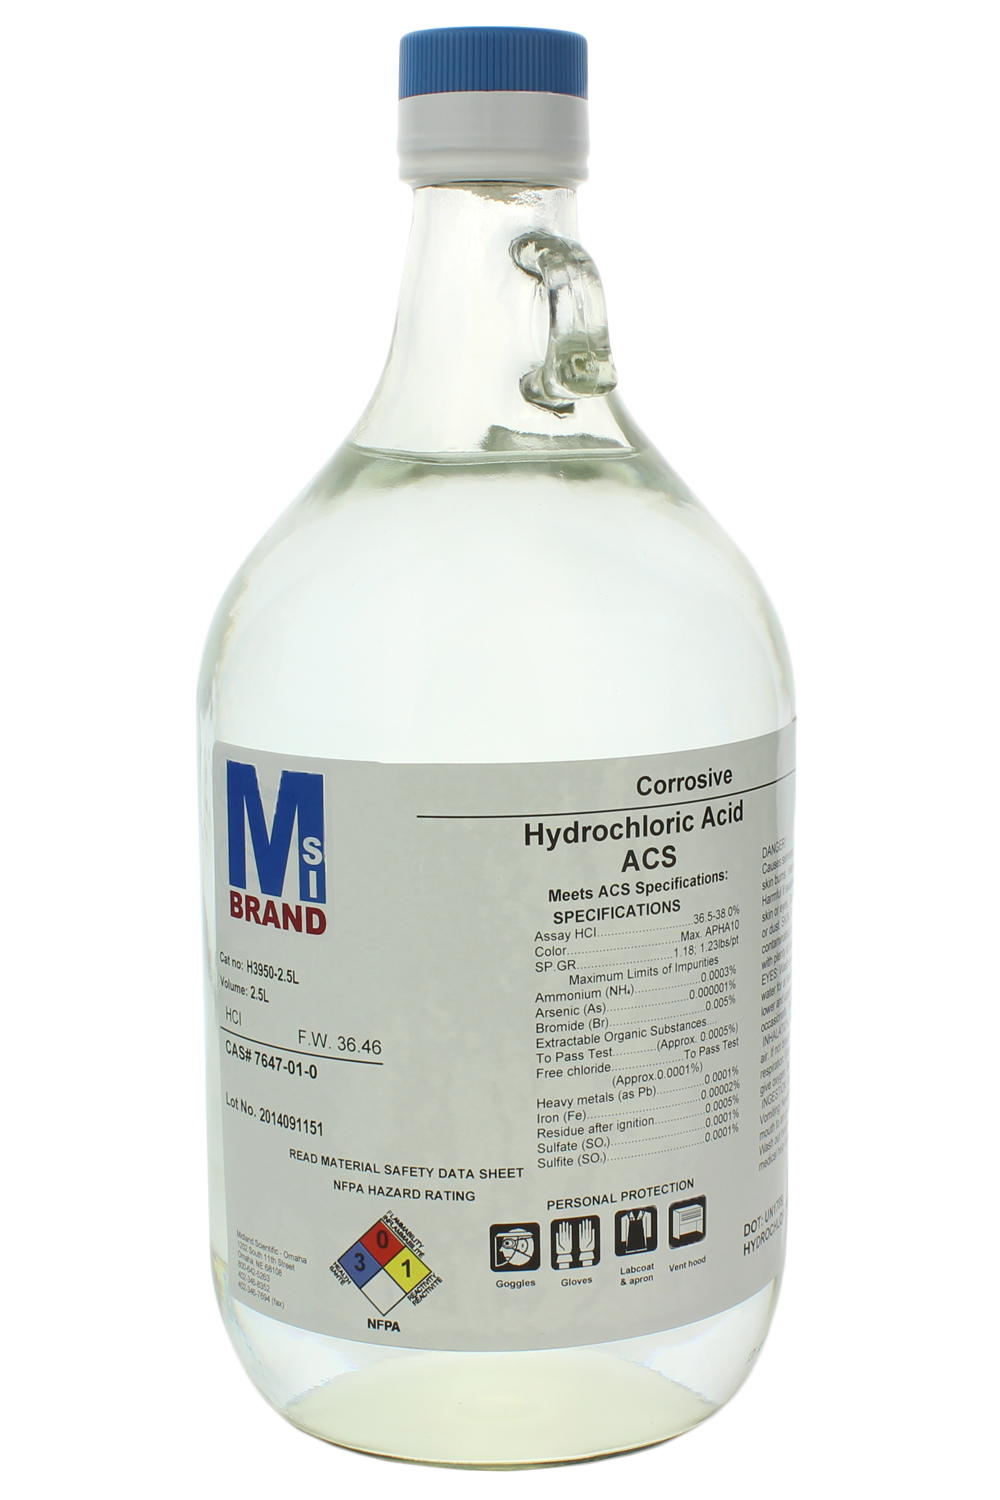 MSI Brand ACS Grade Hydrochloric Acid